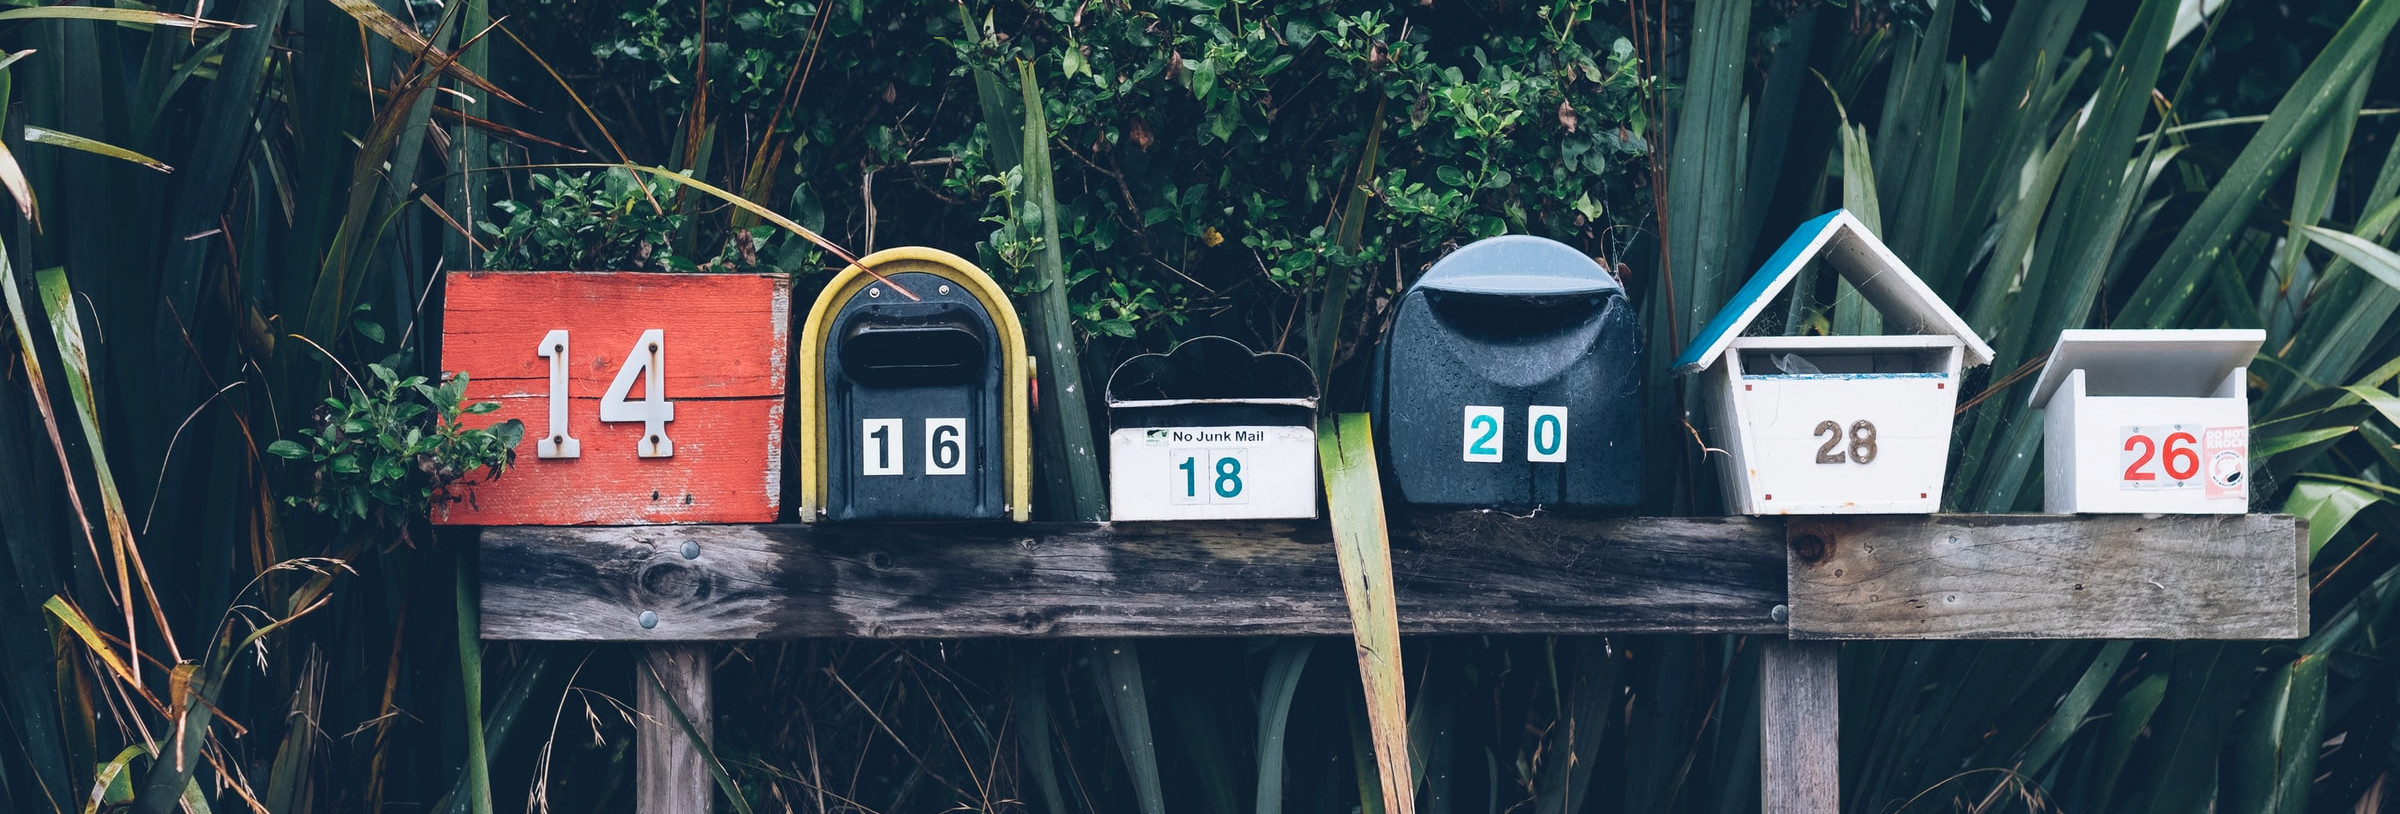 Muriwai mailboxes by Mathyas Kurmann on Unsplash